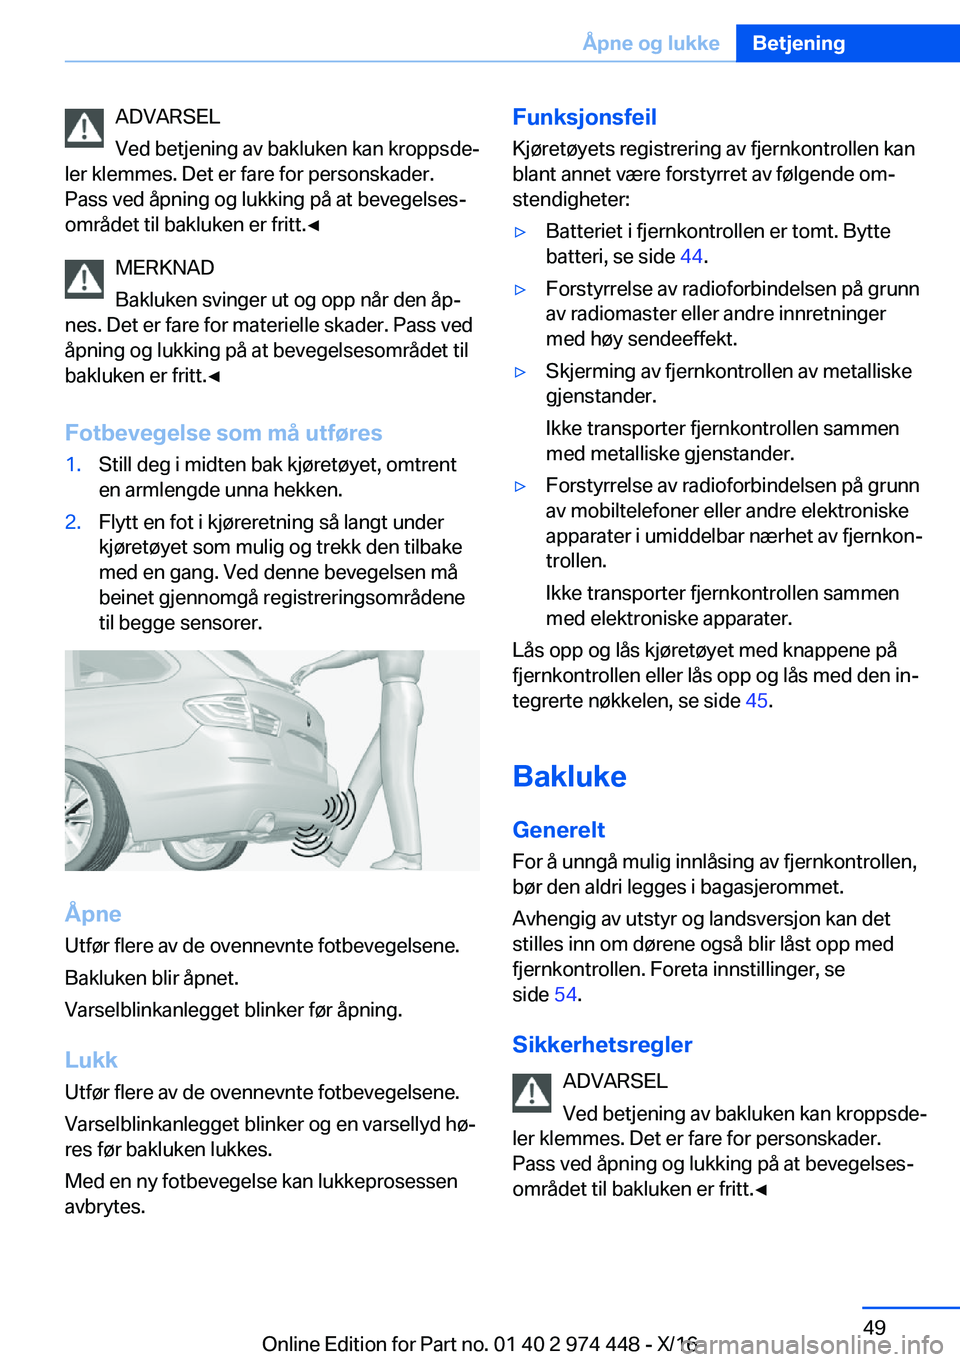 BMW 4 SERIES GRAN COUPE 2017  InstruksjonsbØker (in Norwegian) �A�D�V�A�R�S�E�L
�V�e�d� �b�e�t�j�e�n�i�n�g� �a�v� �b�a�k�l�u�k�e�n� �k�a�n� �k�r�o�p�p�s�d�ej
�l�e�r� �k�l�e�m�m�e�s�.� �D�e�t� �e�r� �f�a�r�e� �f�o�r� �p�e�r�s�o�n�s�k�a�d�e�r�.
�P�a�s�s� �v�e�d� �